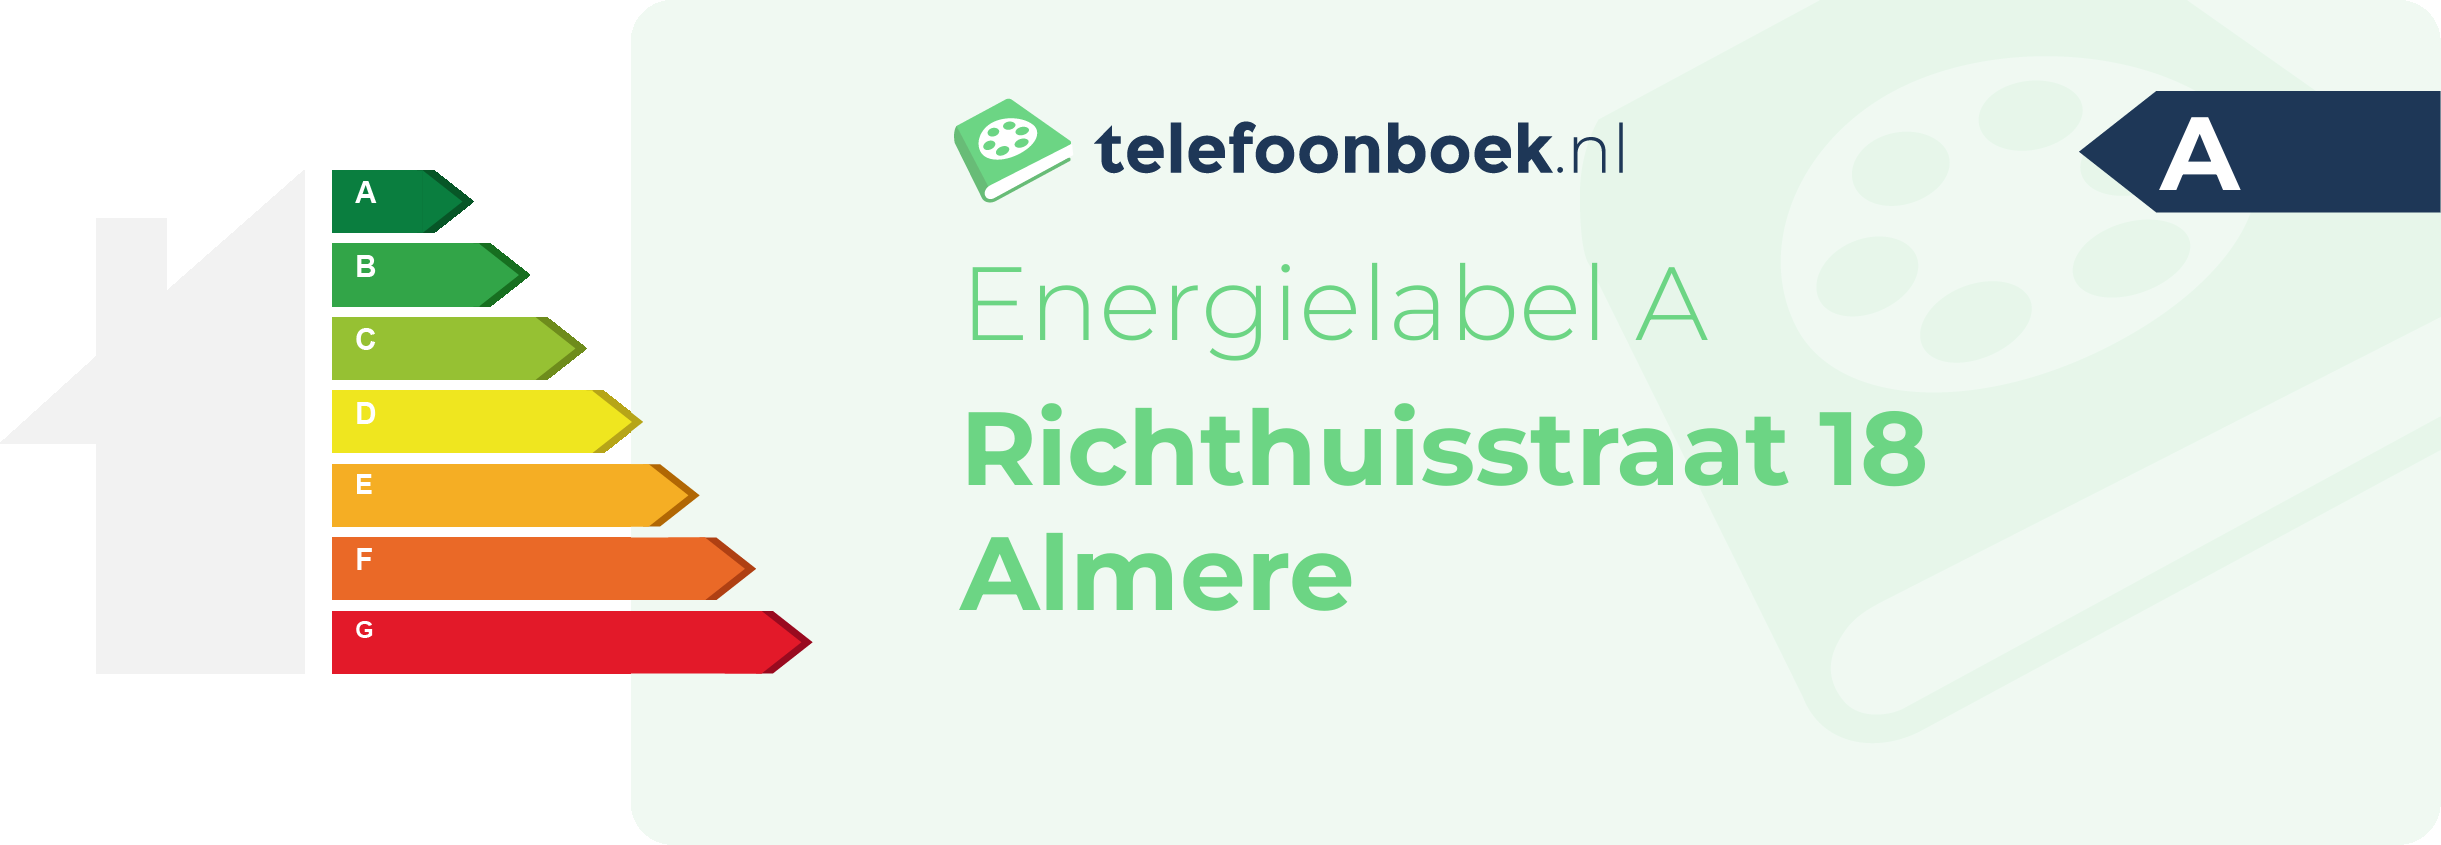 Energielabel Richthuisstraat 18 Almere